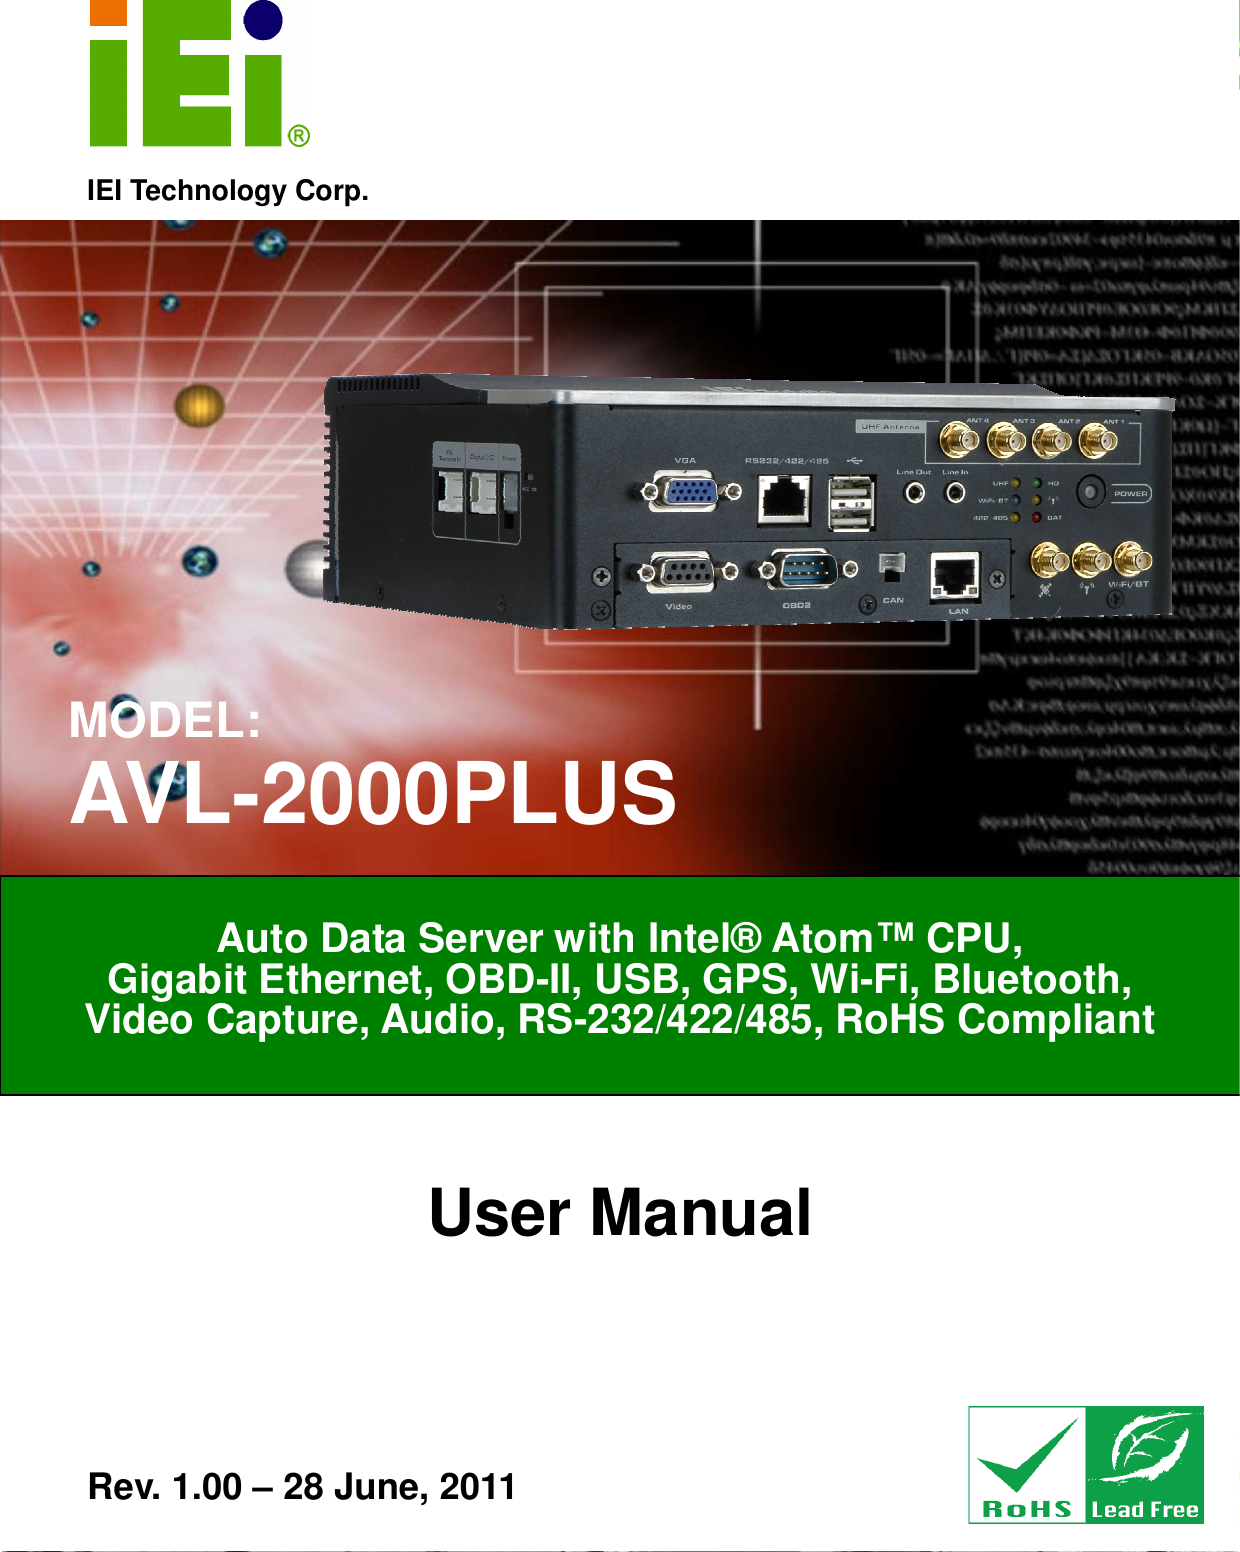   AVL-2000PLUS Auto Data Server Page 1 IEI Technology Corp. User Manual  MODEL: AVL-2000PLUS Auto Data Server with Intel® Atom™ CPU,  Gigabit Ethernet, OBD-II, USB, GPS, Wi-Fi, Bluetooth, Video Capture, Audio, RS-232/422/485, RoHS Compliant Rev. 1.00 – 28 June, 2011 